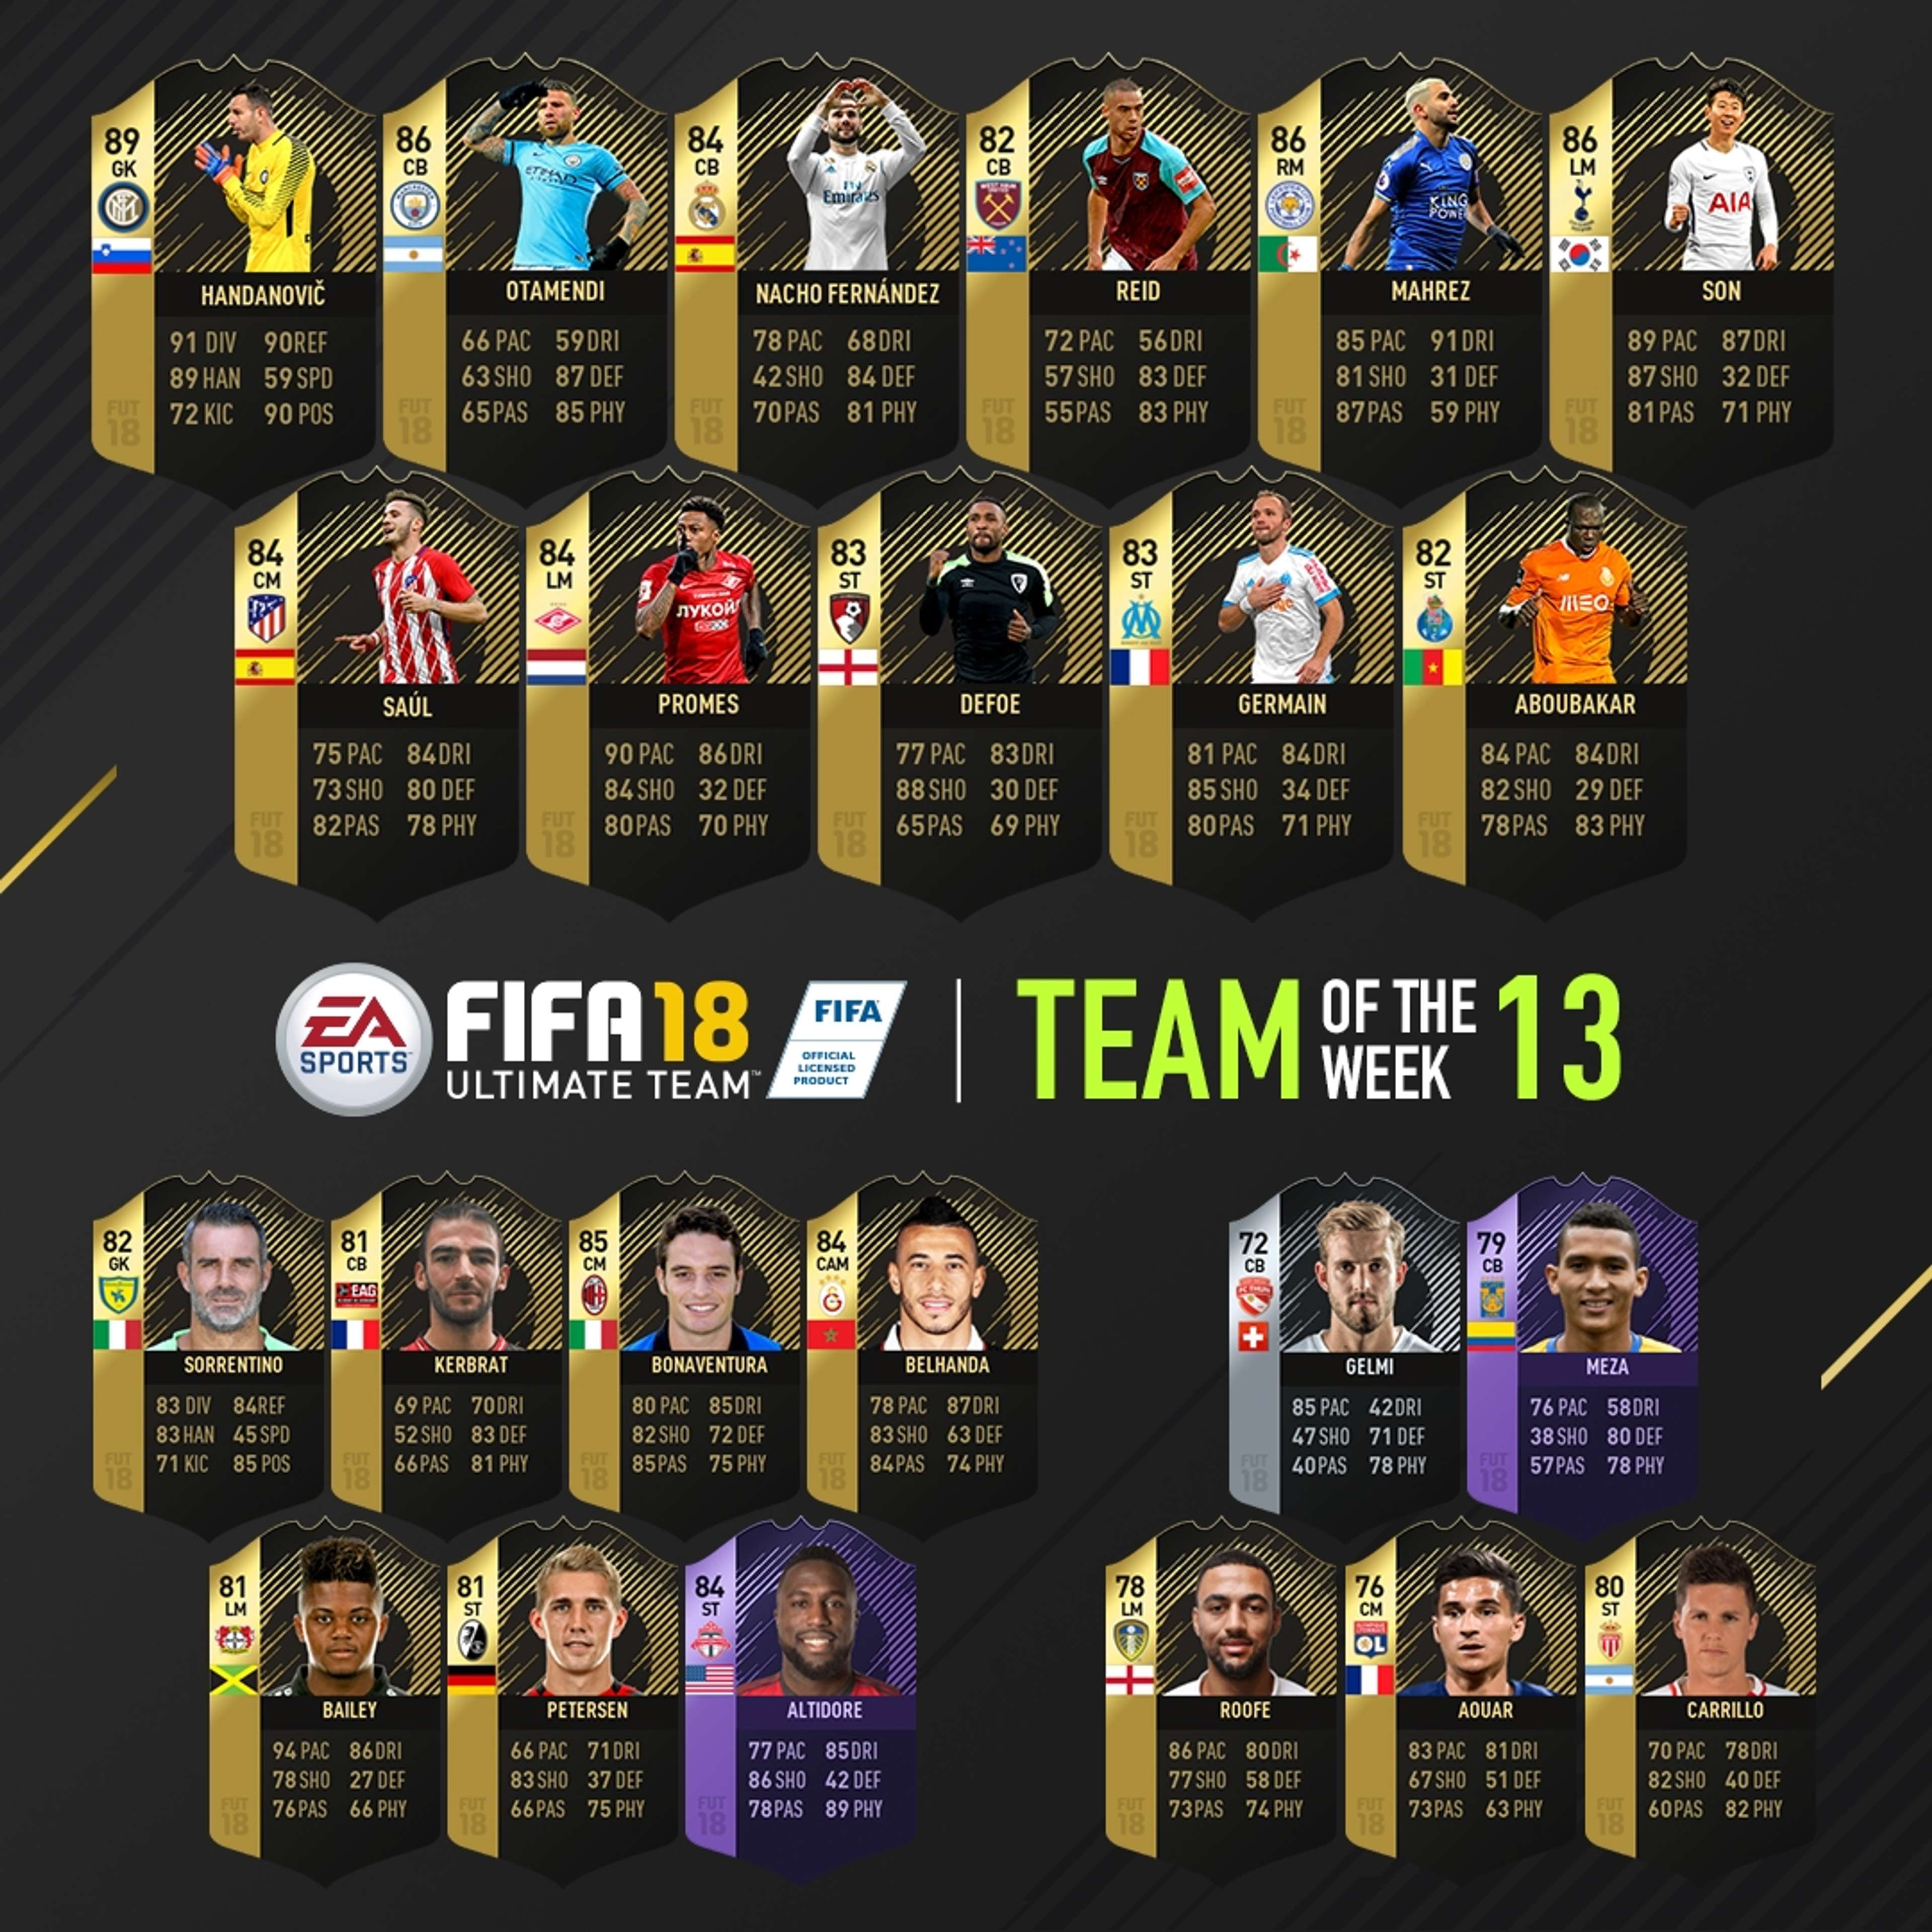 FIFA Ultimate Team of the Week 13